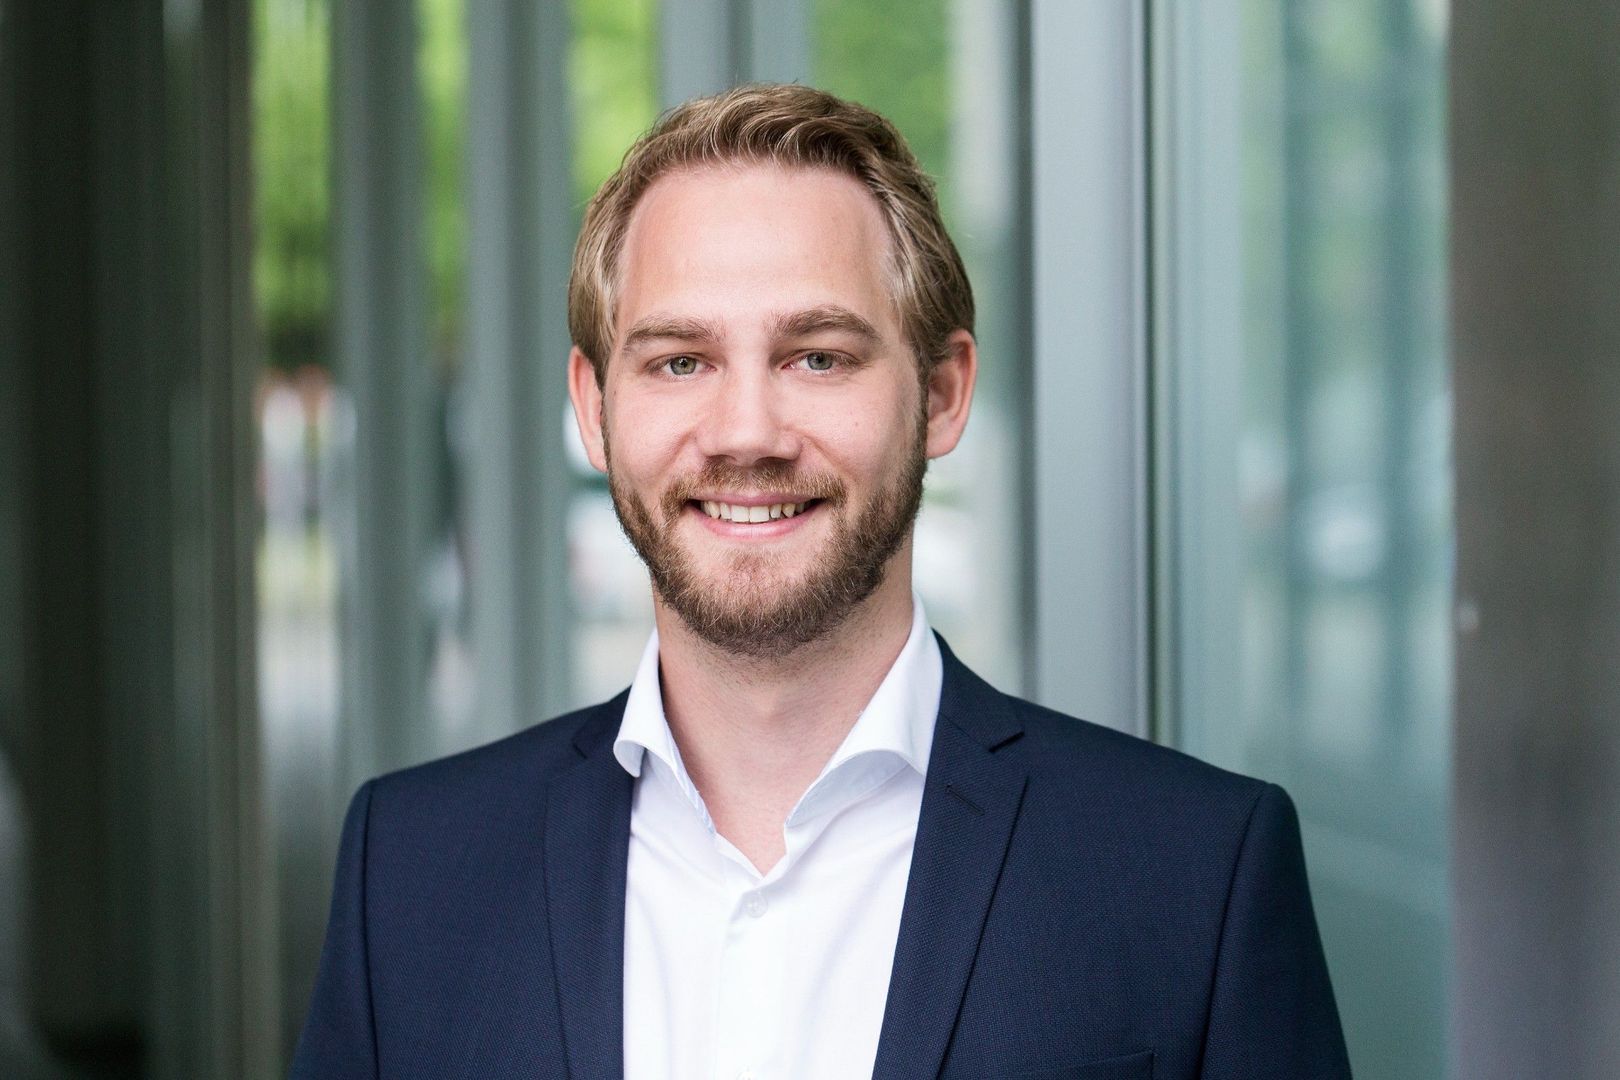 Johannes Paffgen is the Chief Trading Officer at Next Kraftwerke